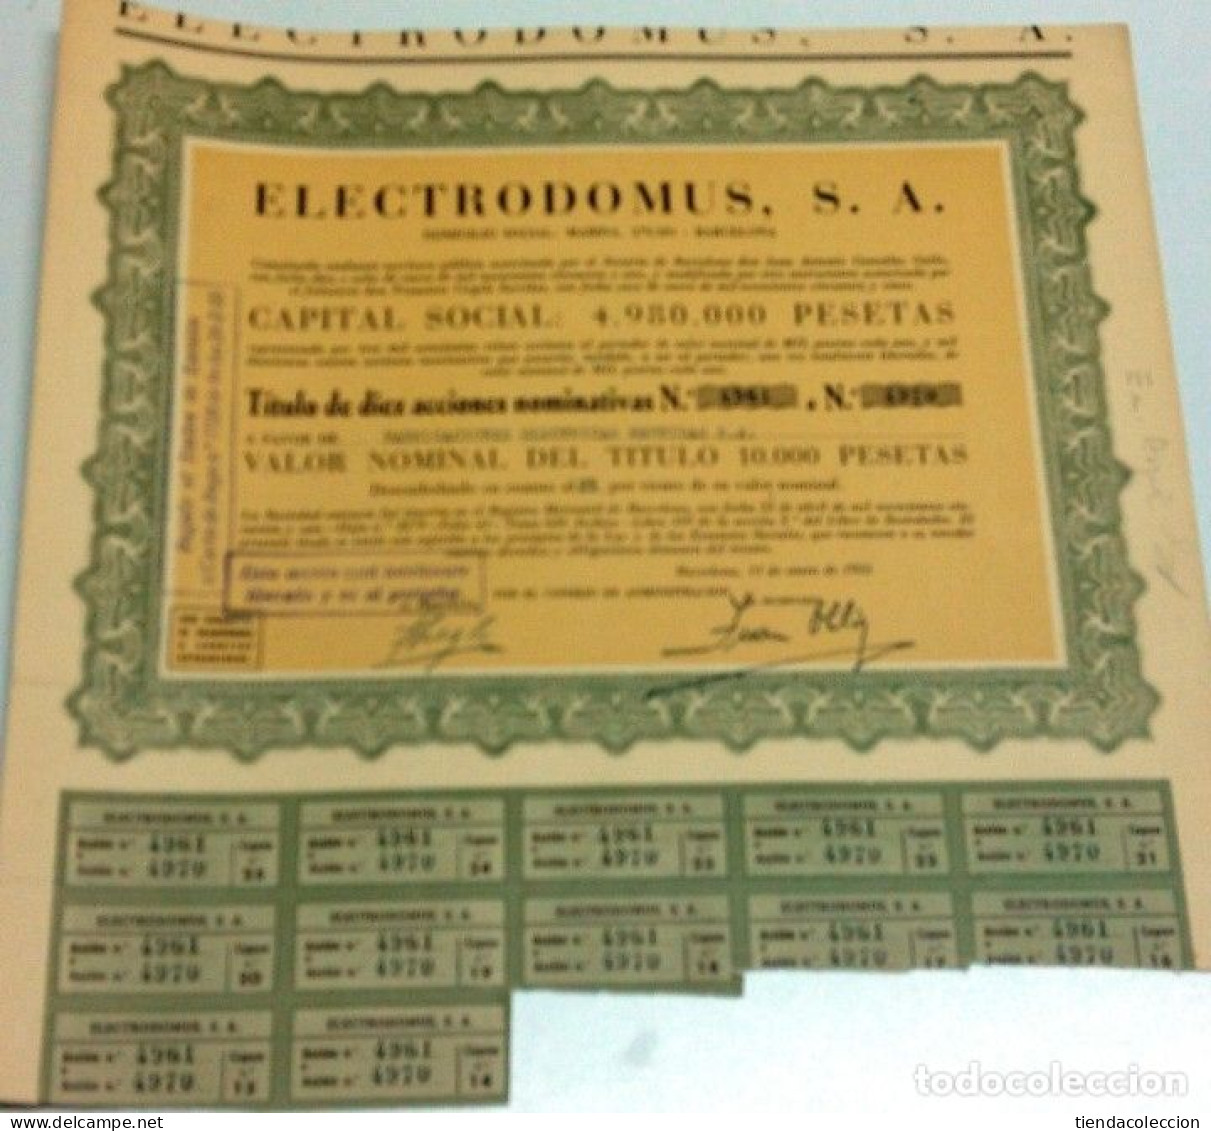 Electrodomus, S. A. - Electricity & Gas